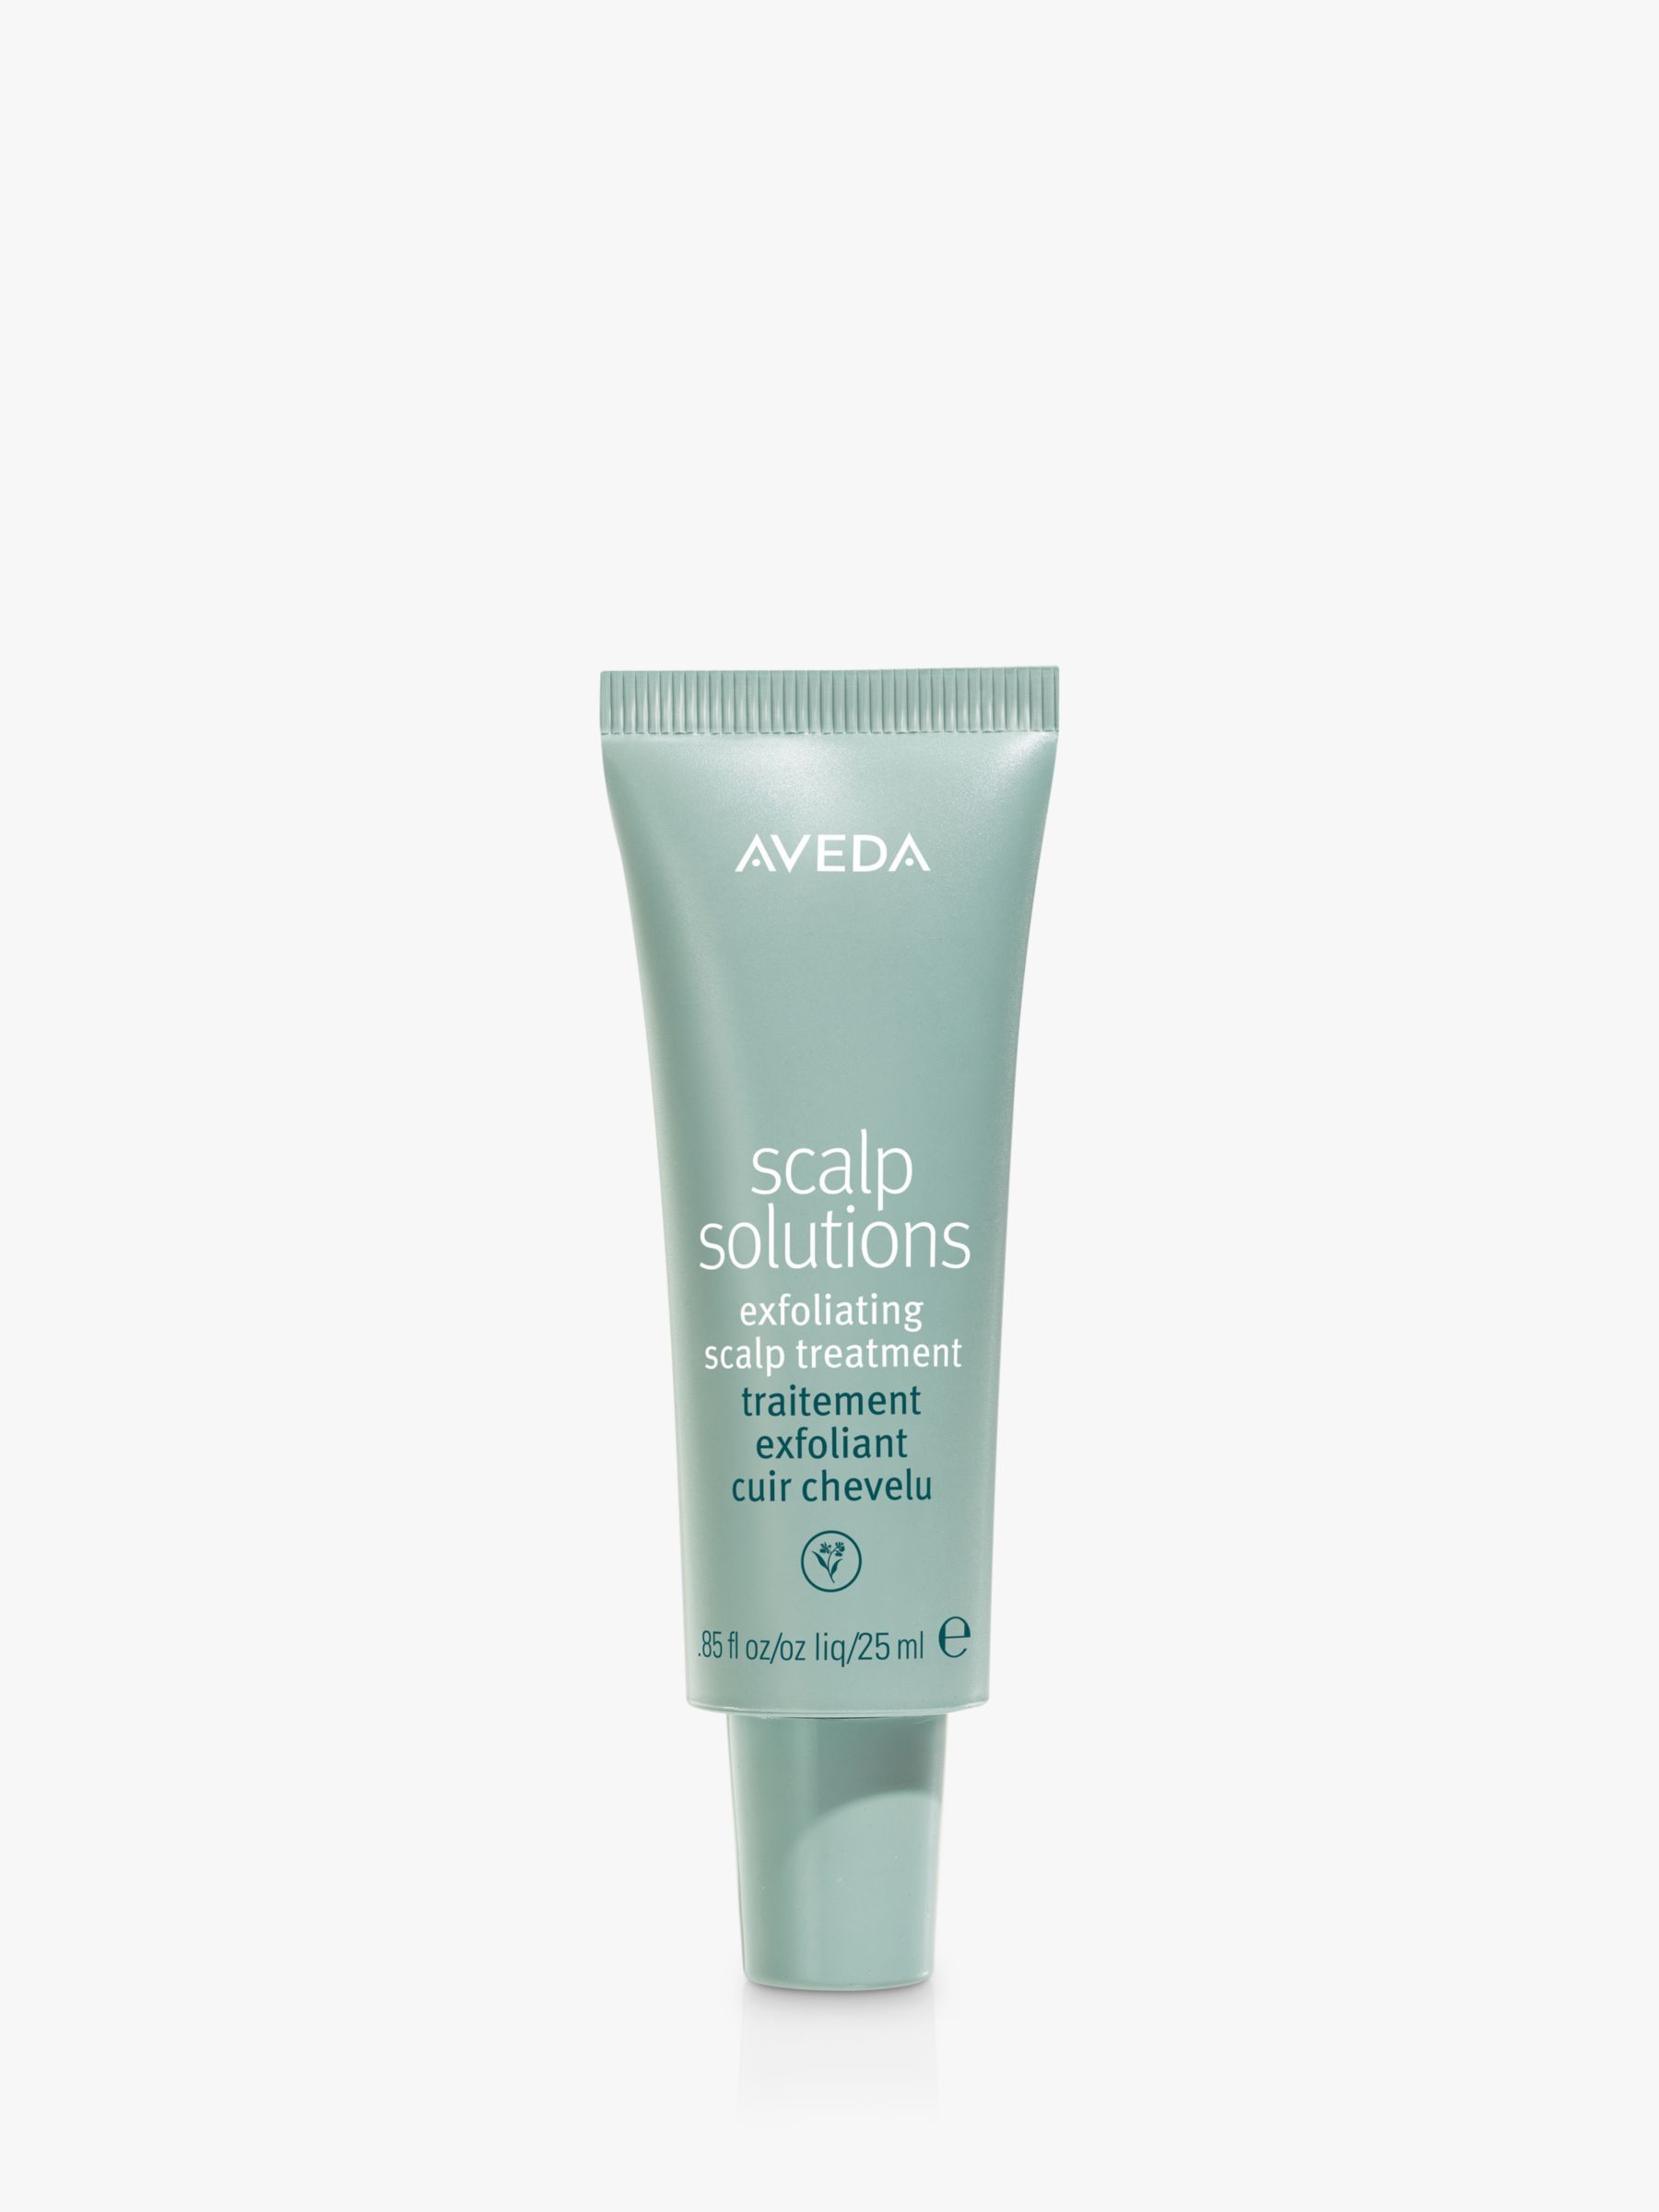 Aveda Scalp Solutions Exfoliating Scalp Treatment, 25ml